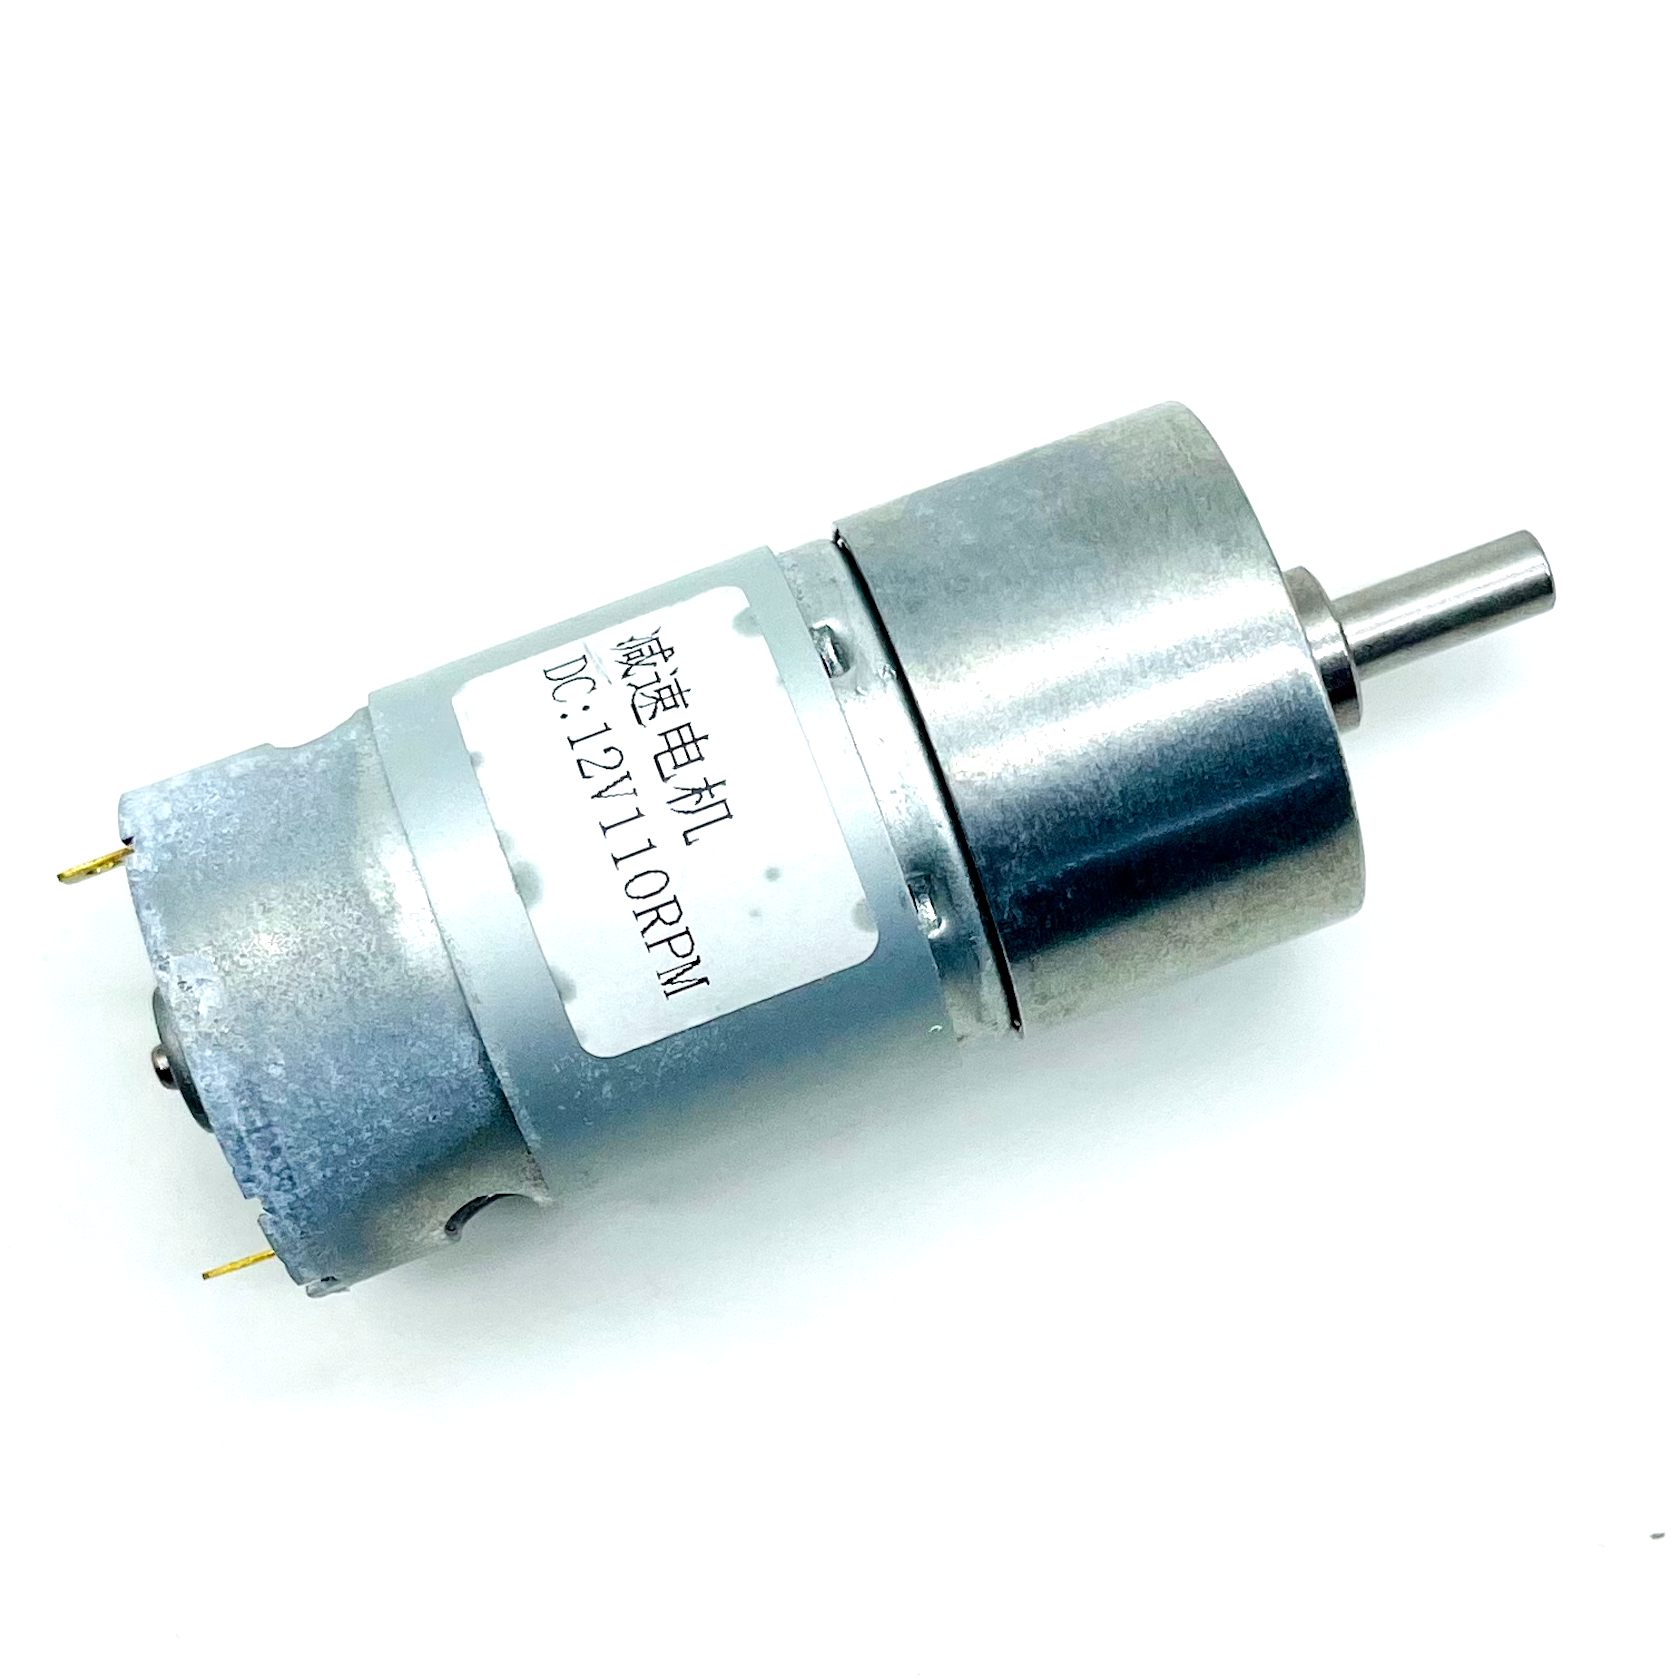 37mm Diameter Small DC Gear Motors